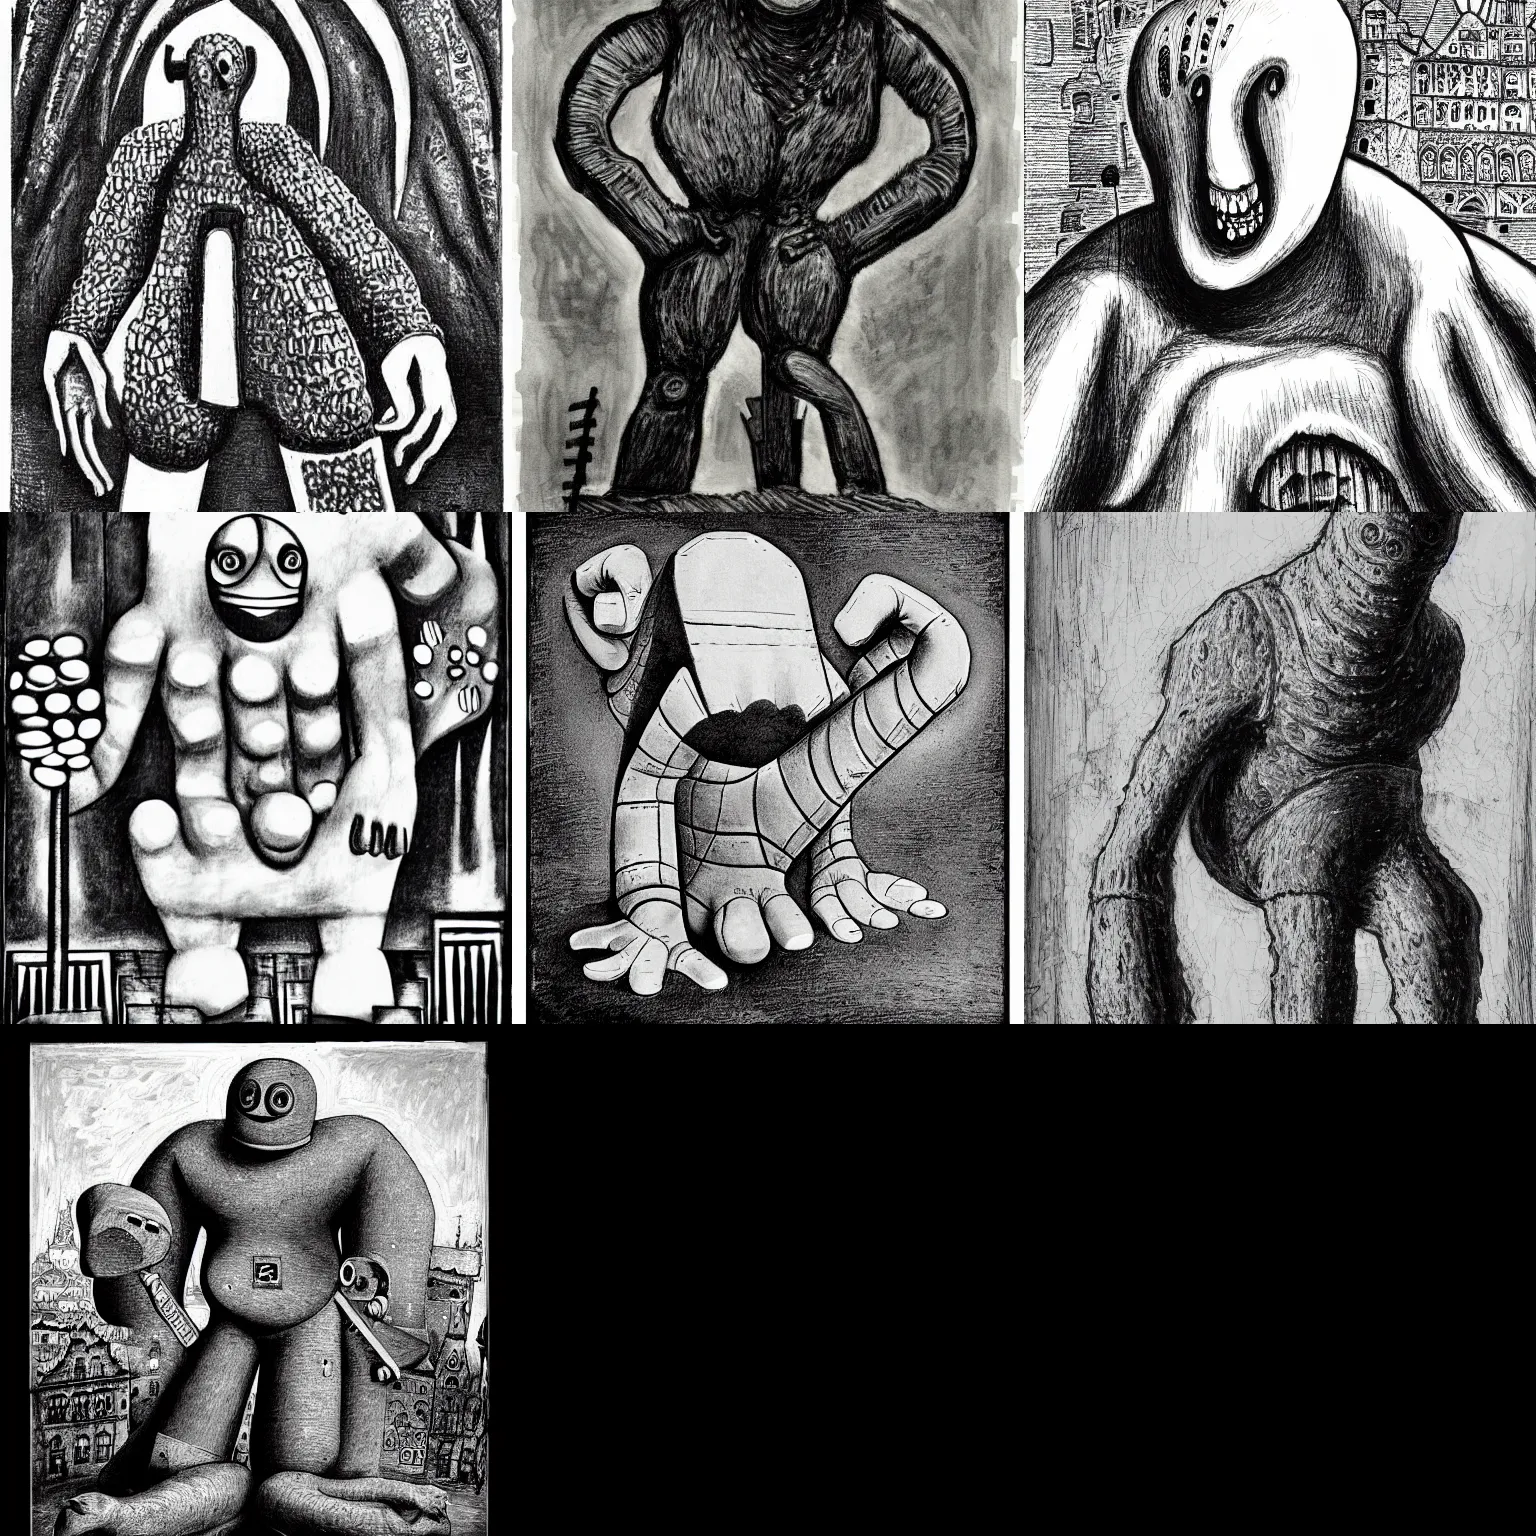 Prompt: black and white dada artwork of the monster golem from prague